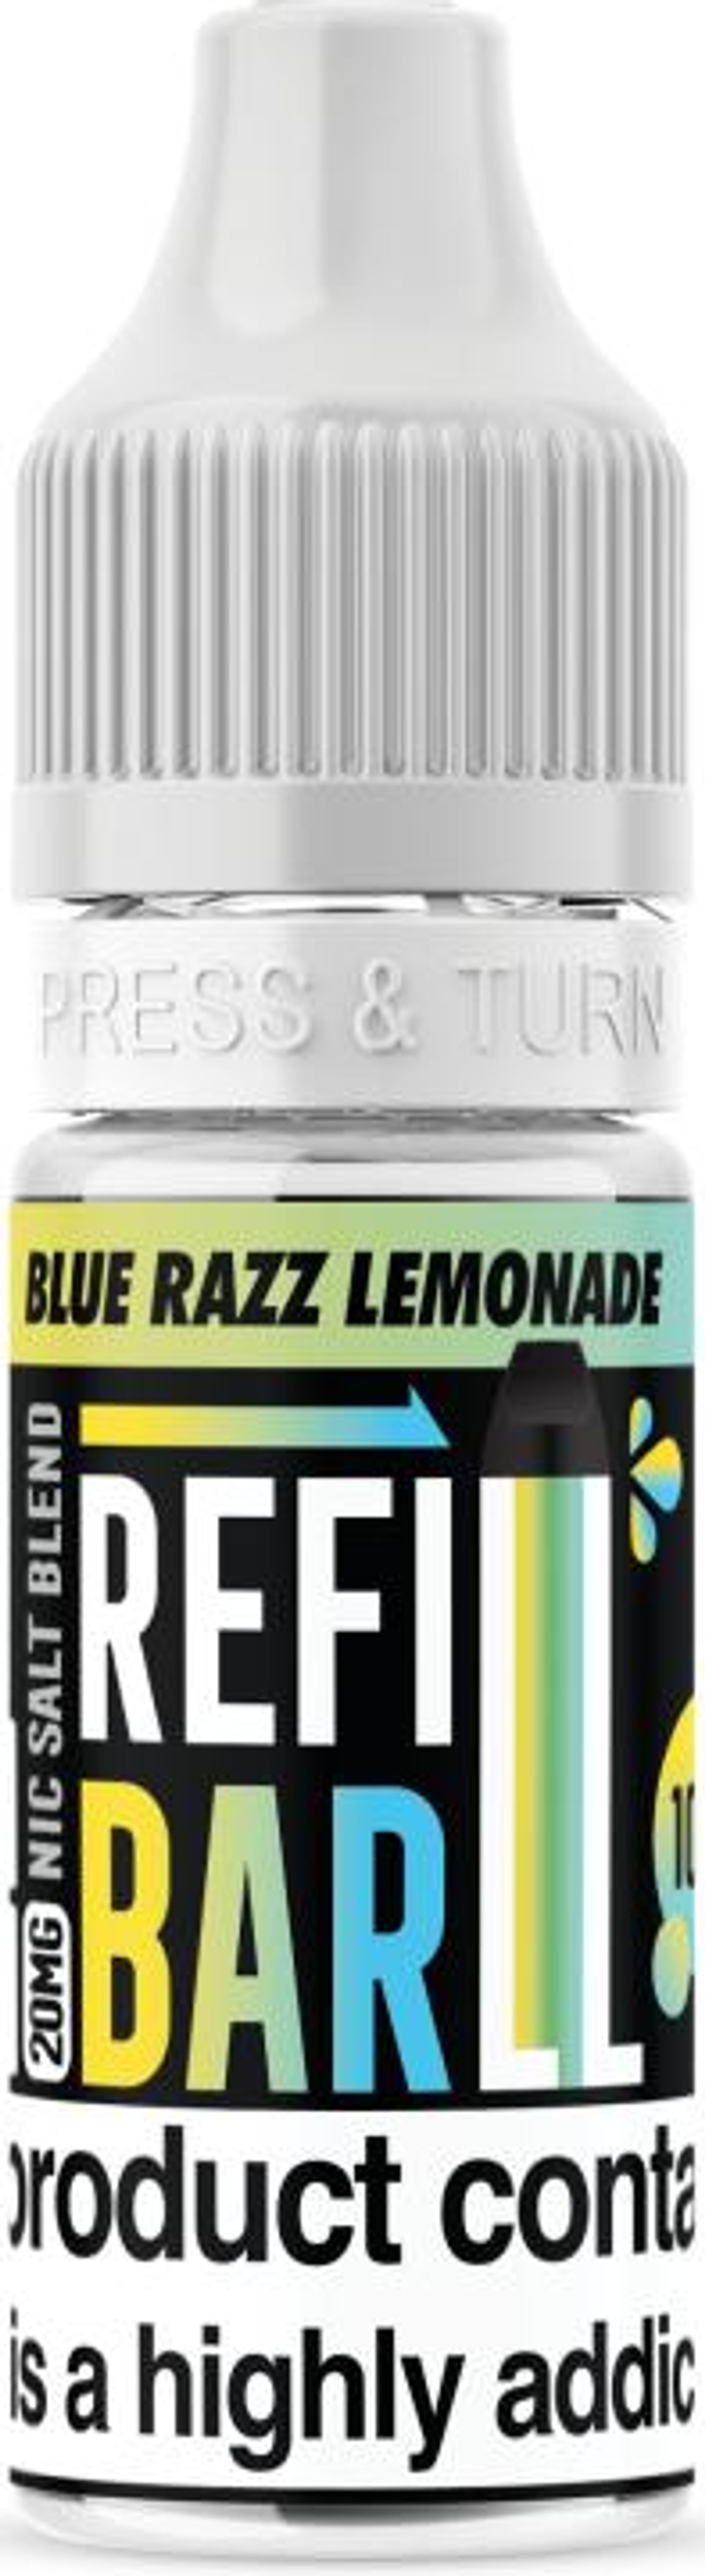 Image of Blue Razz Lemonade by Refill Bar Salts